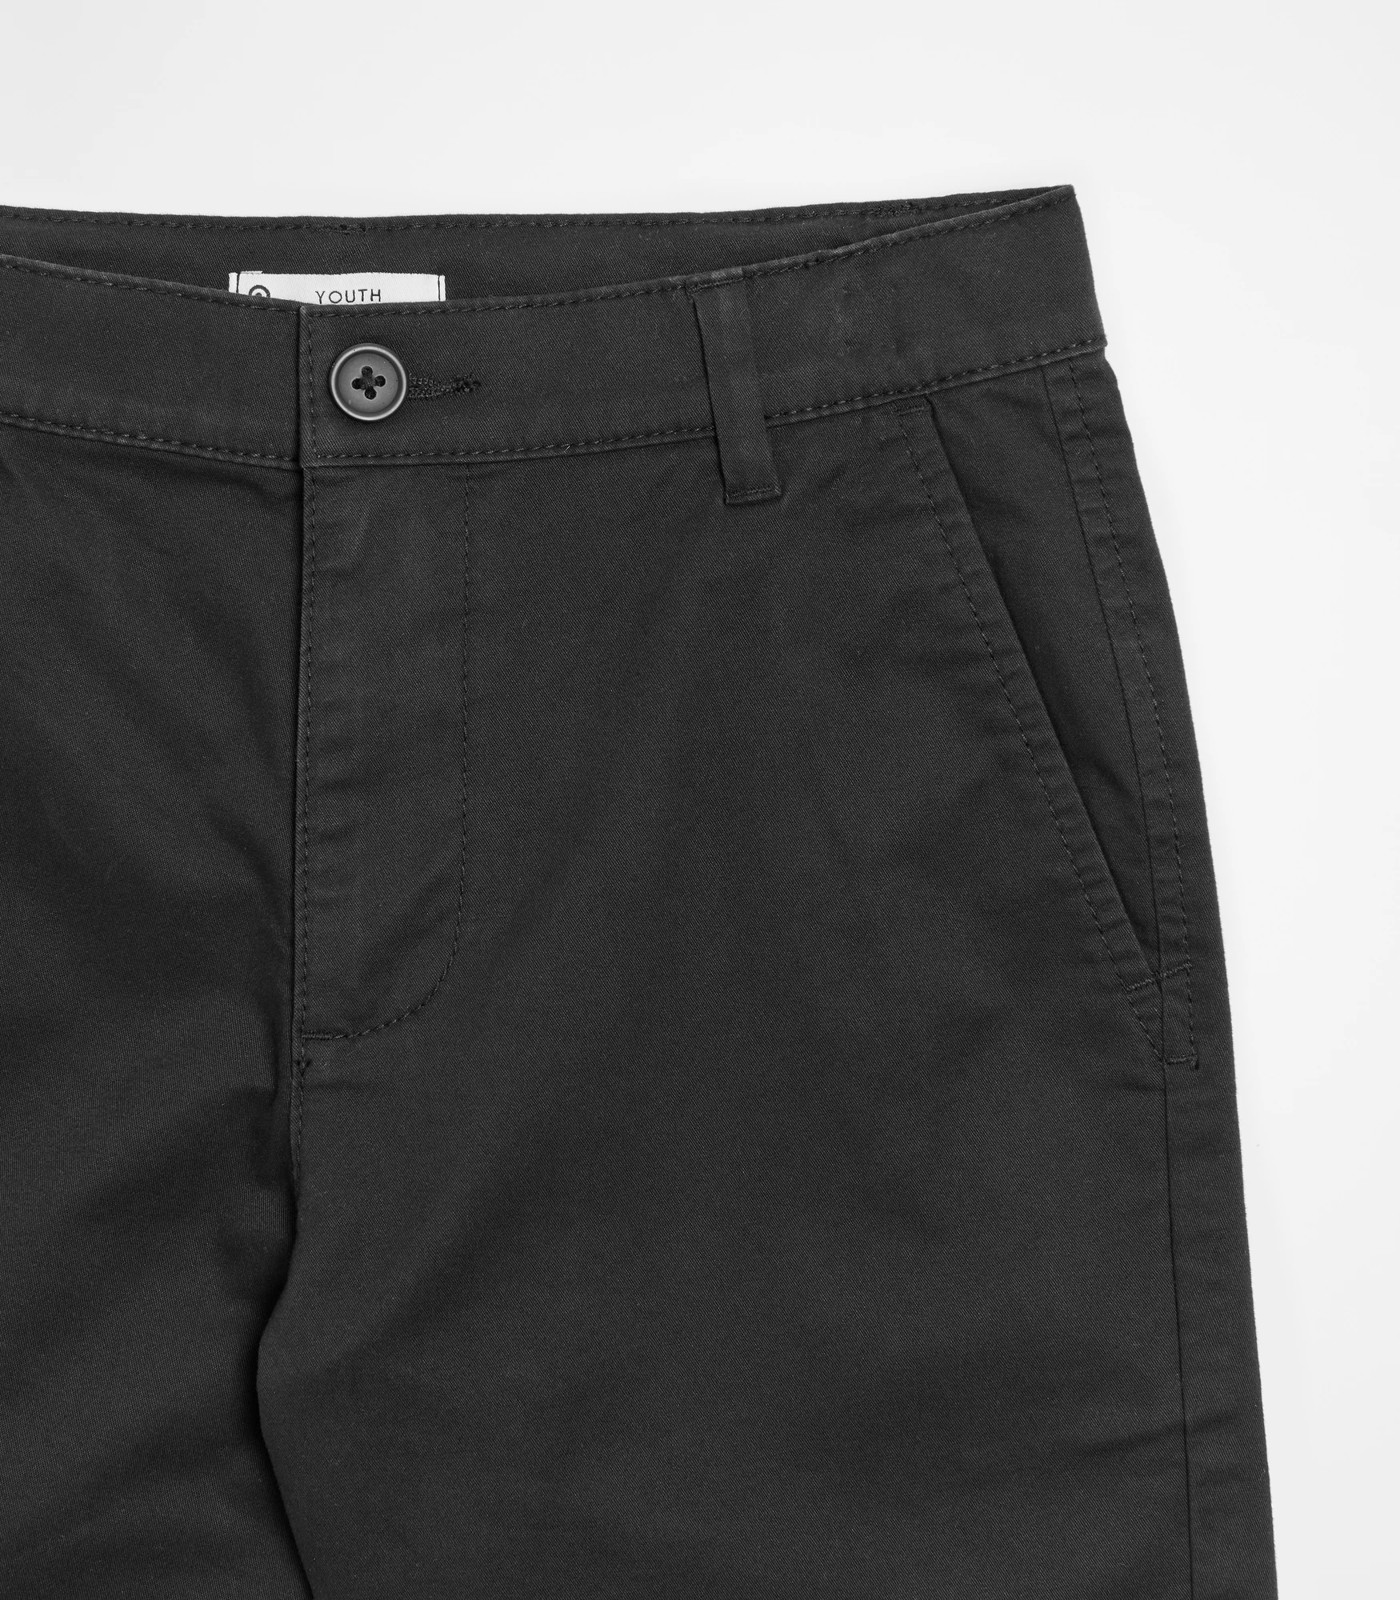 Chino Shorts | Target Australia